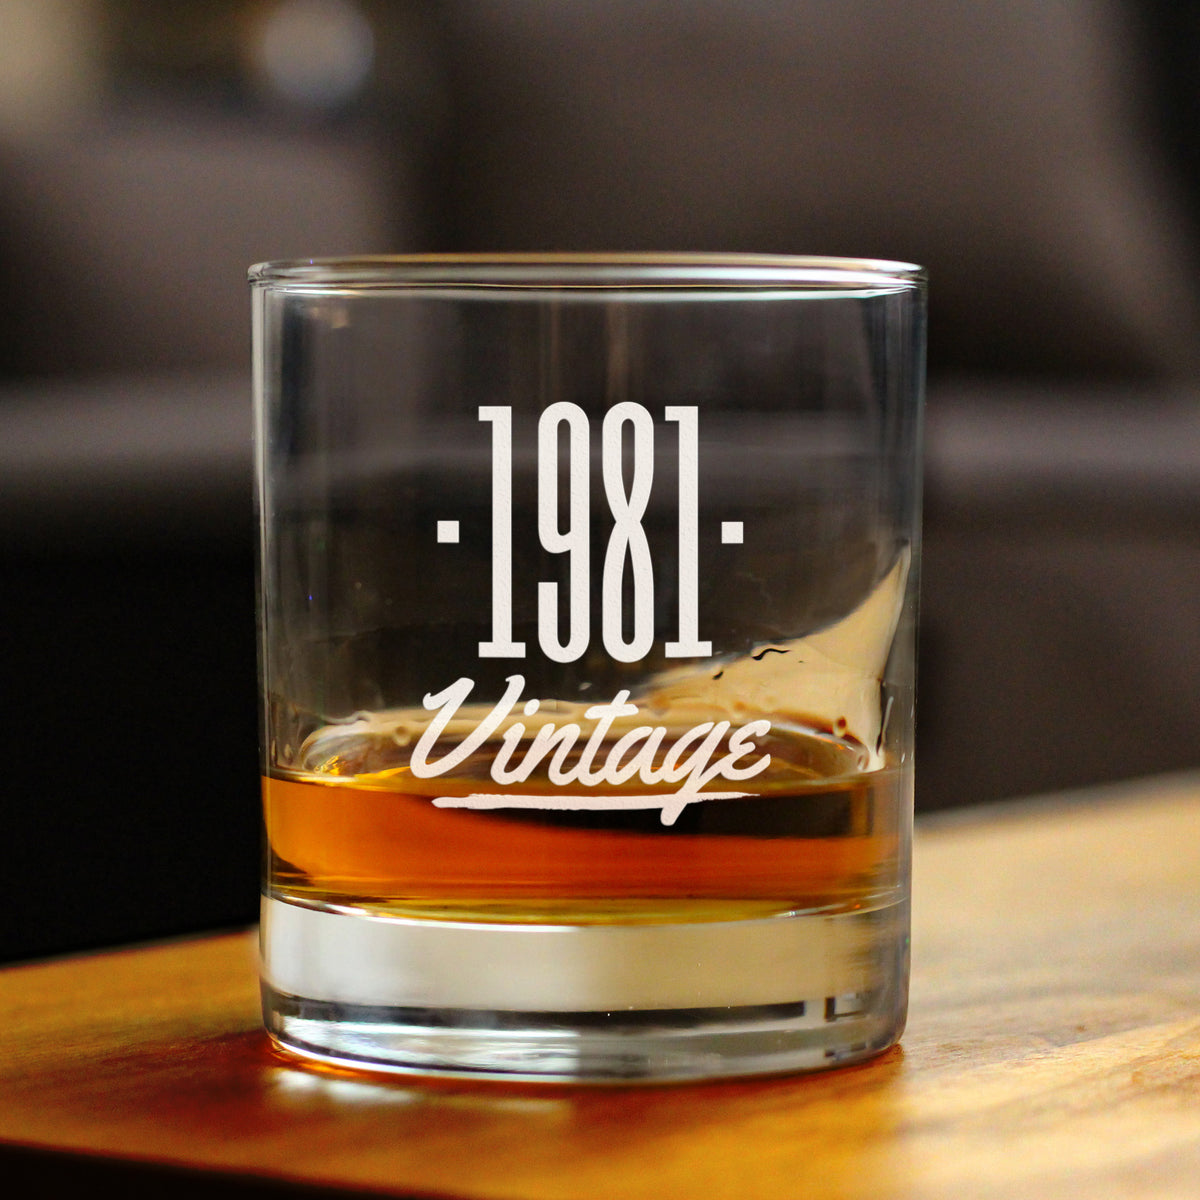 Vintage 1981 - Fun 41st Birthday Whiskey Rocks Glass Gifts for Men &amp; Women Turning 41 - Retro Whisky Drinking Tumbler